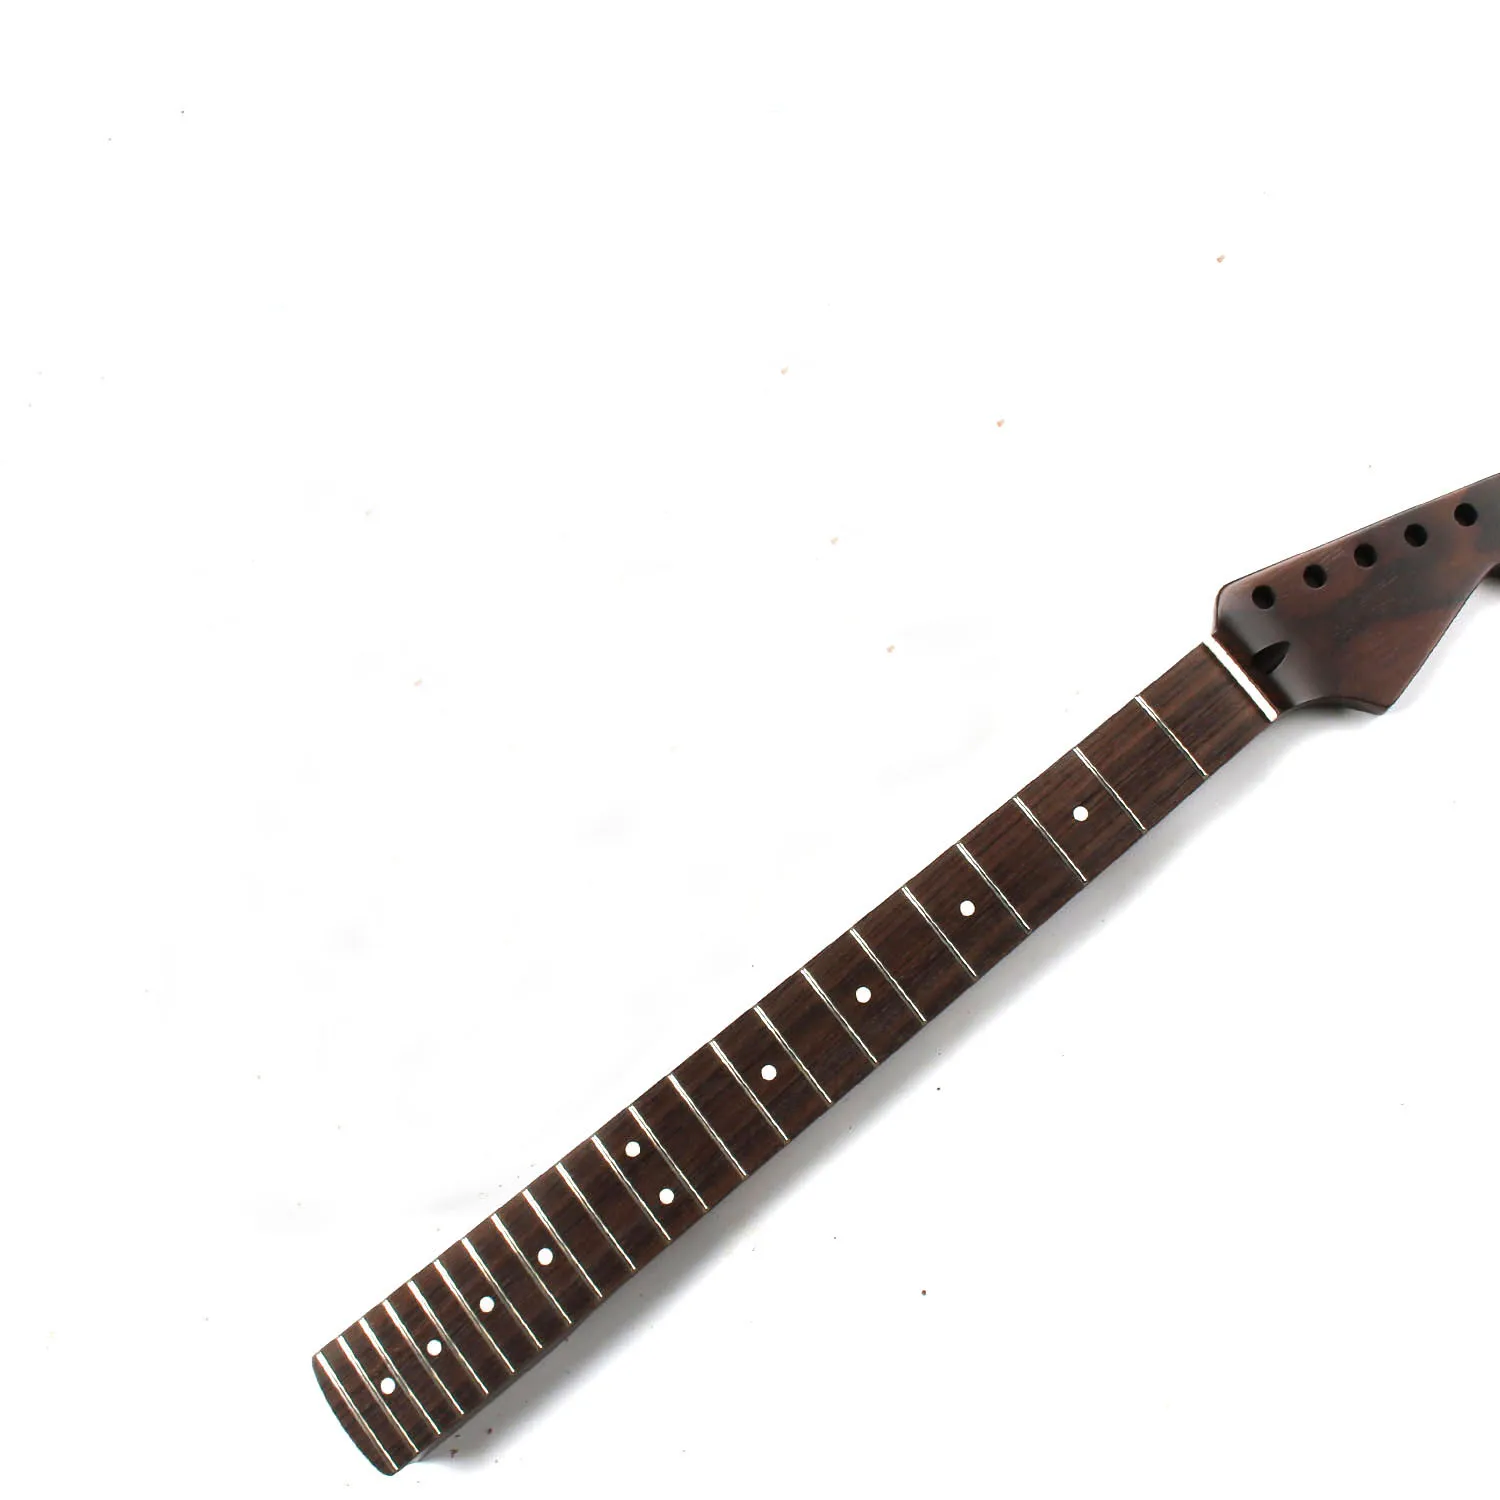 Musoo marca de guitarra elétrica pescoço para todos os sólidos rosewood